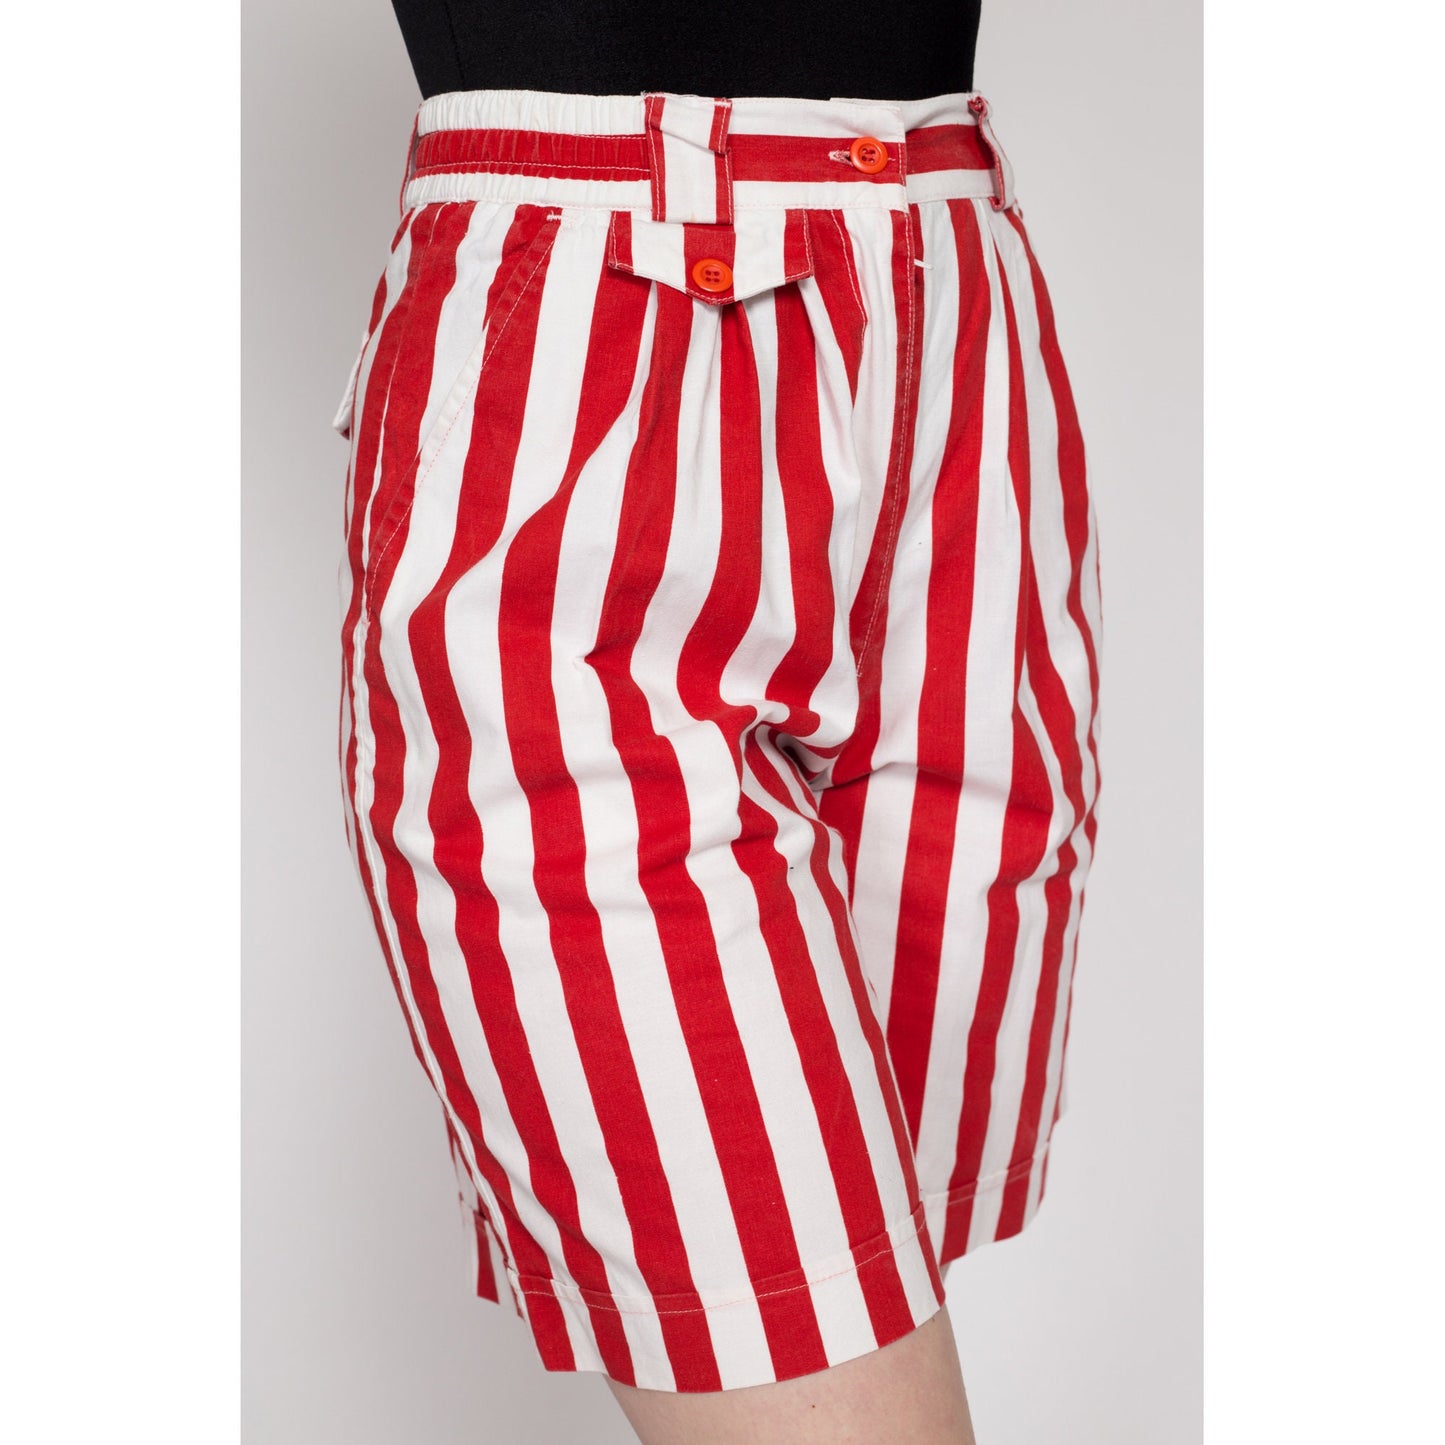 Medium 80s Red & White Striped Cotton Shorts | Vintage Elastic Waist Wide Leg Causal Shorts